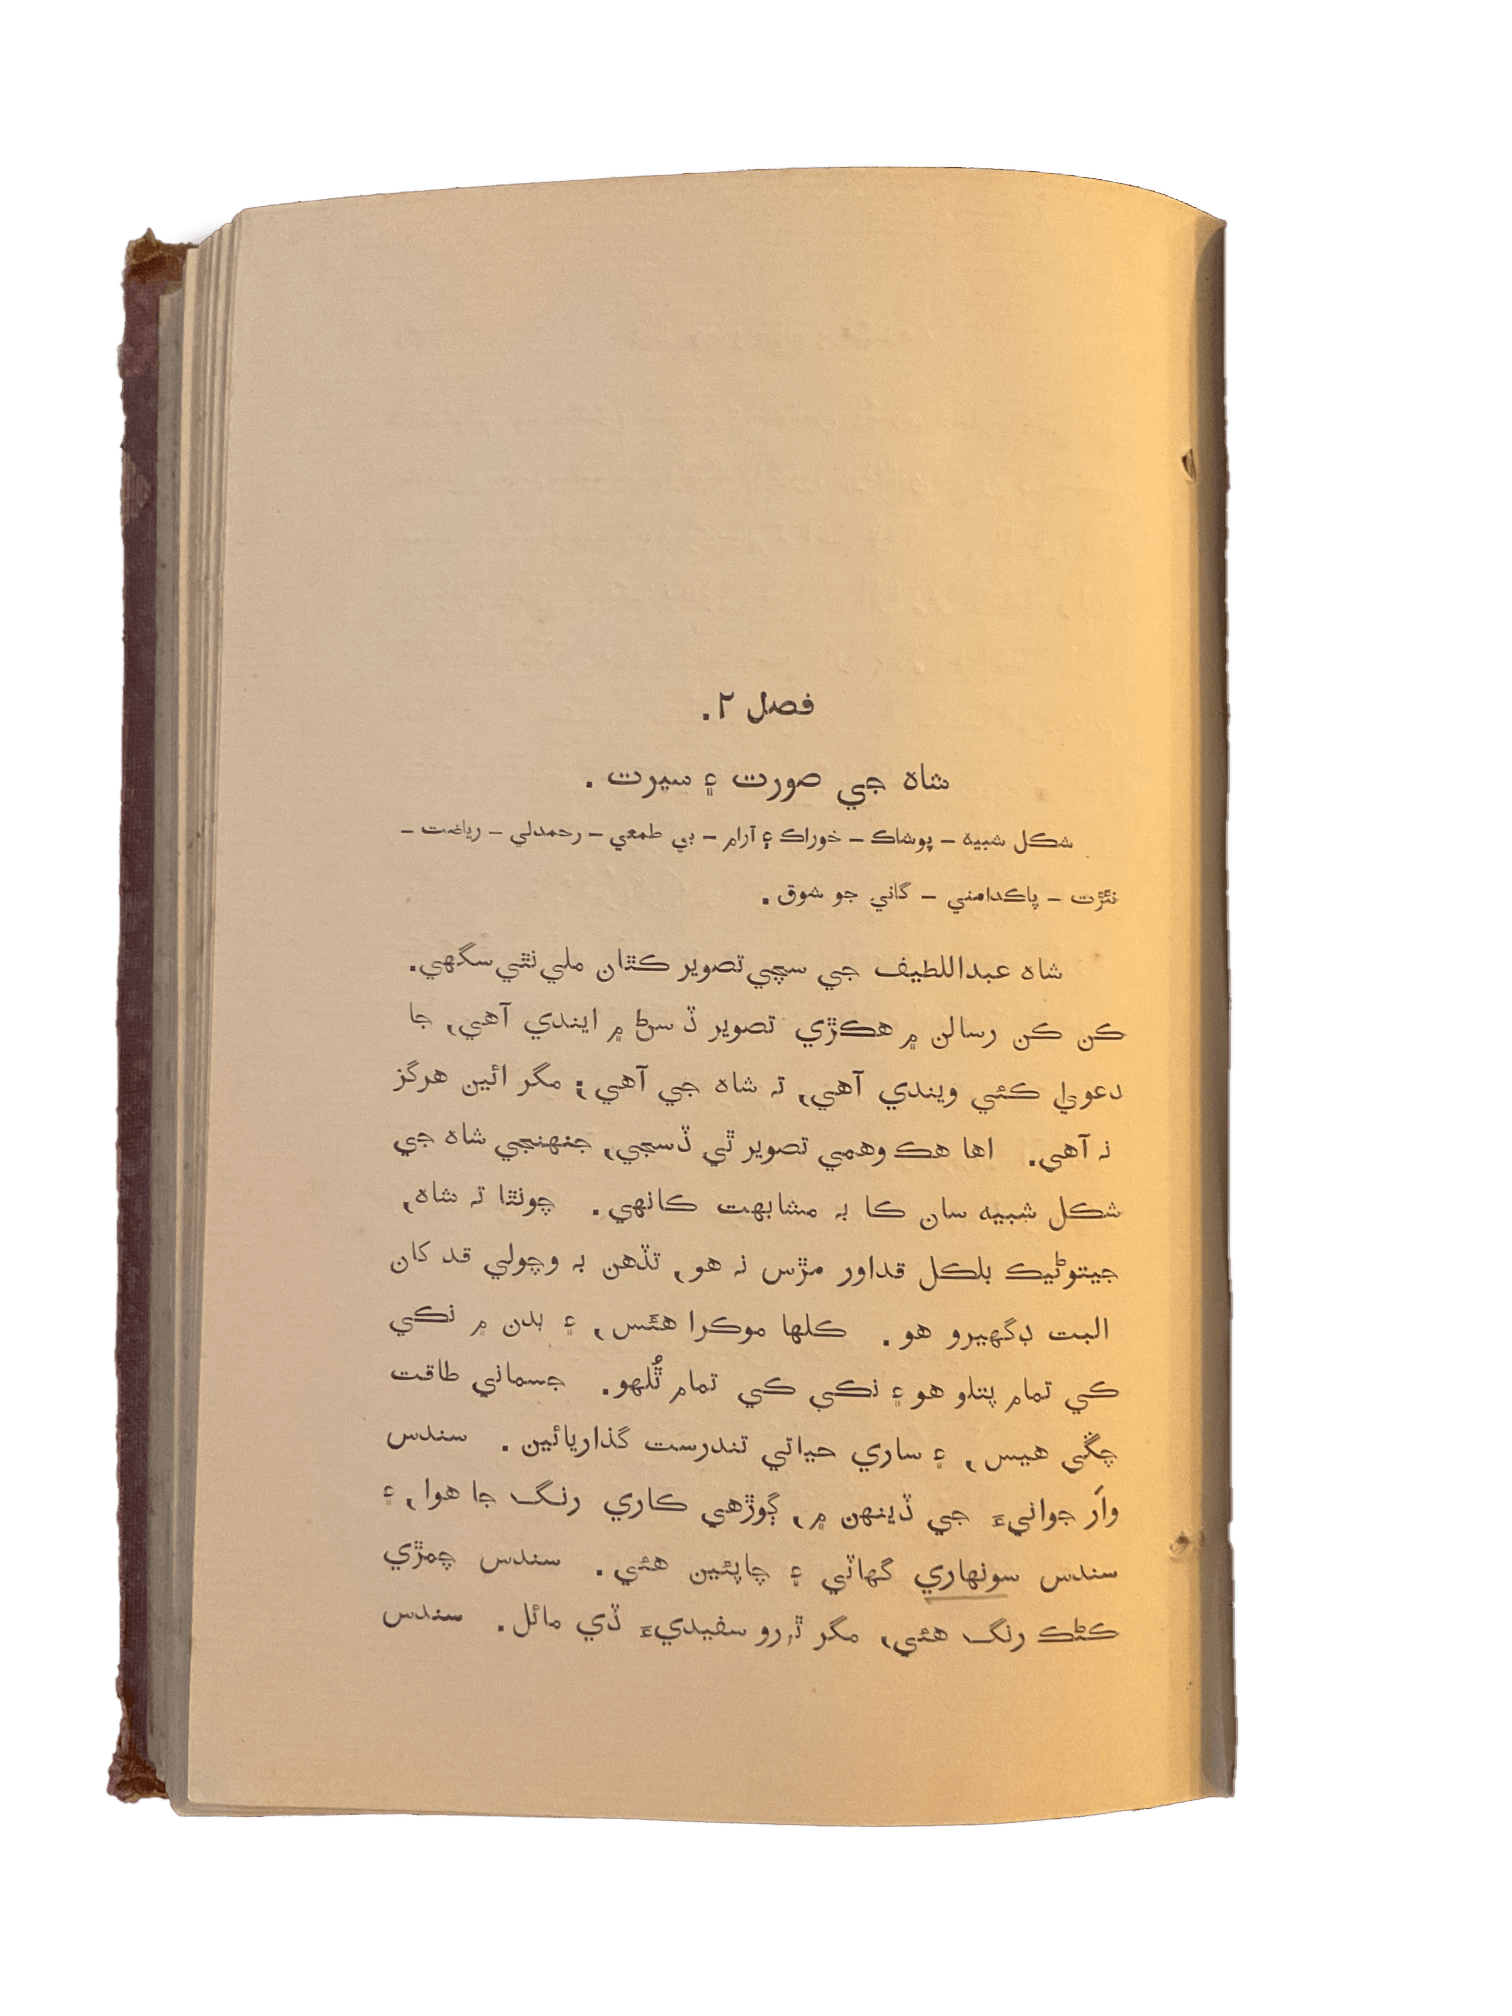 Shah Jo Risalo (Poetry of Shah Abdul Latif Bhittai) - KHAJISTAN™